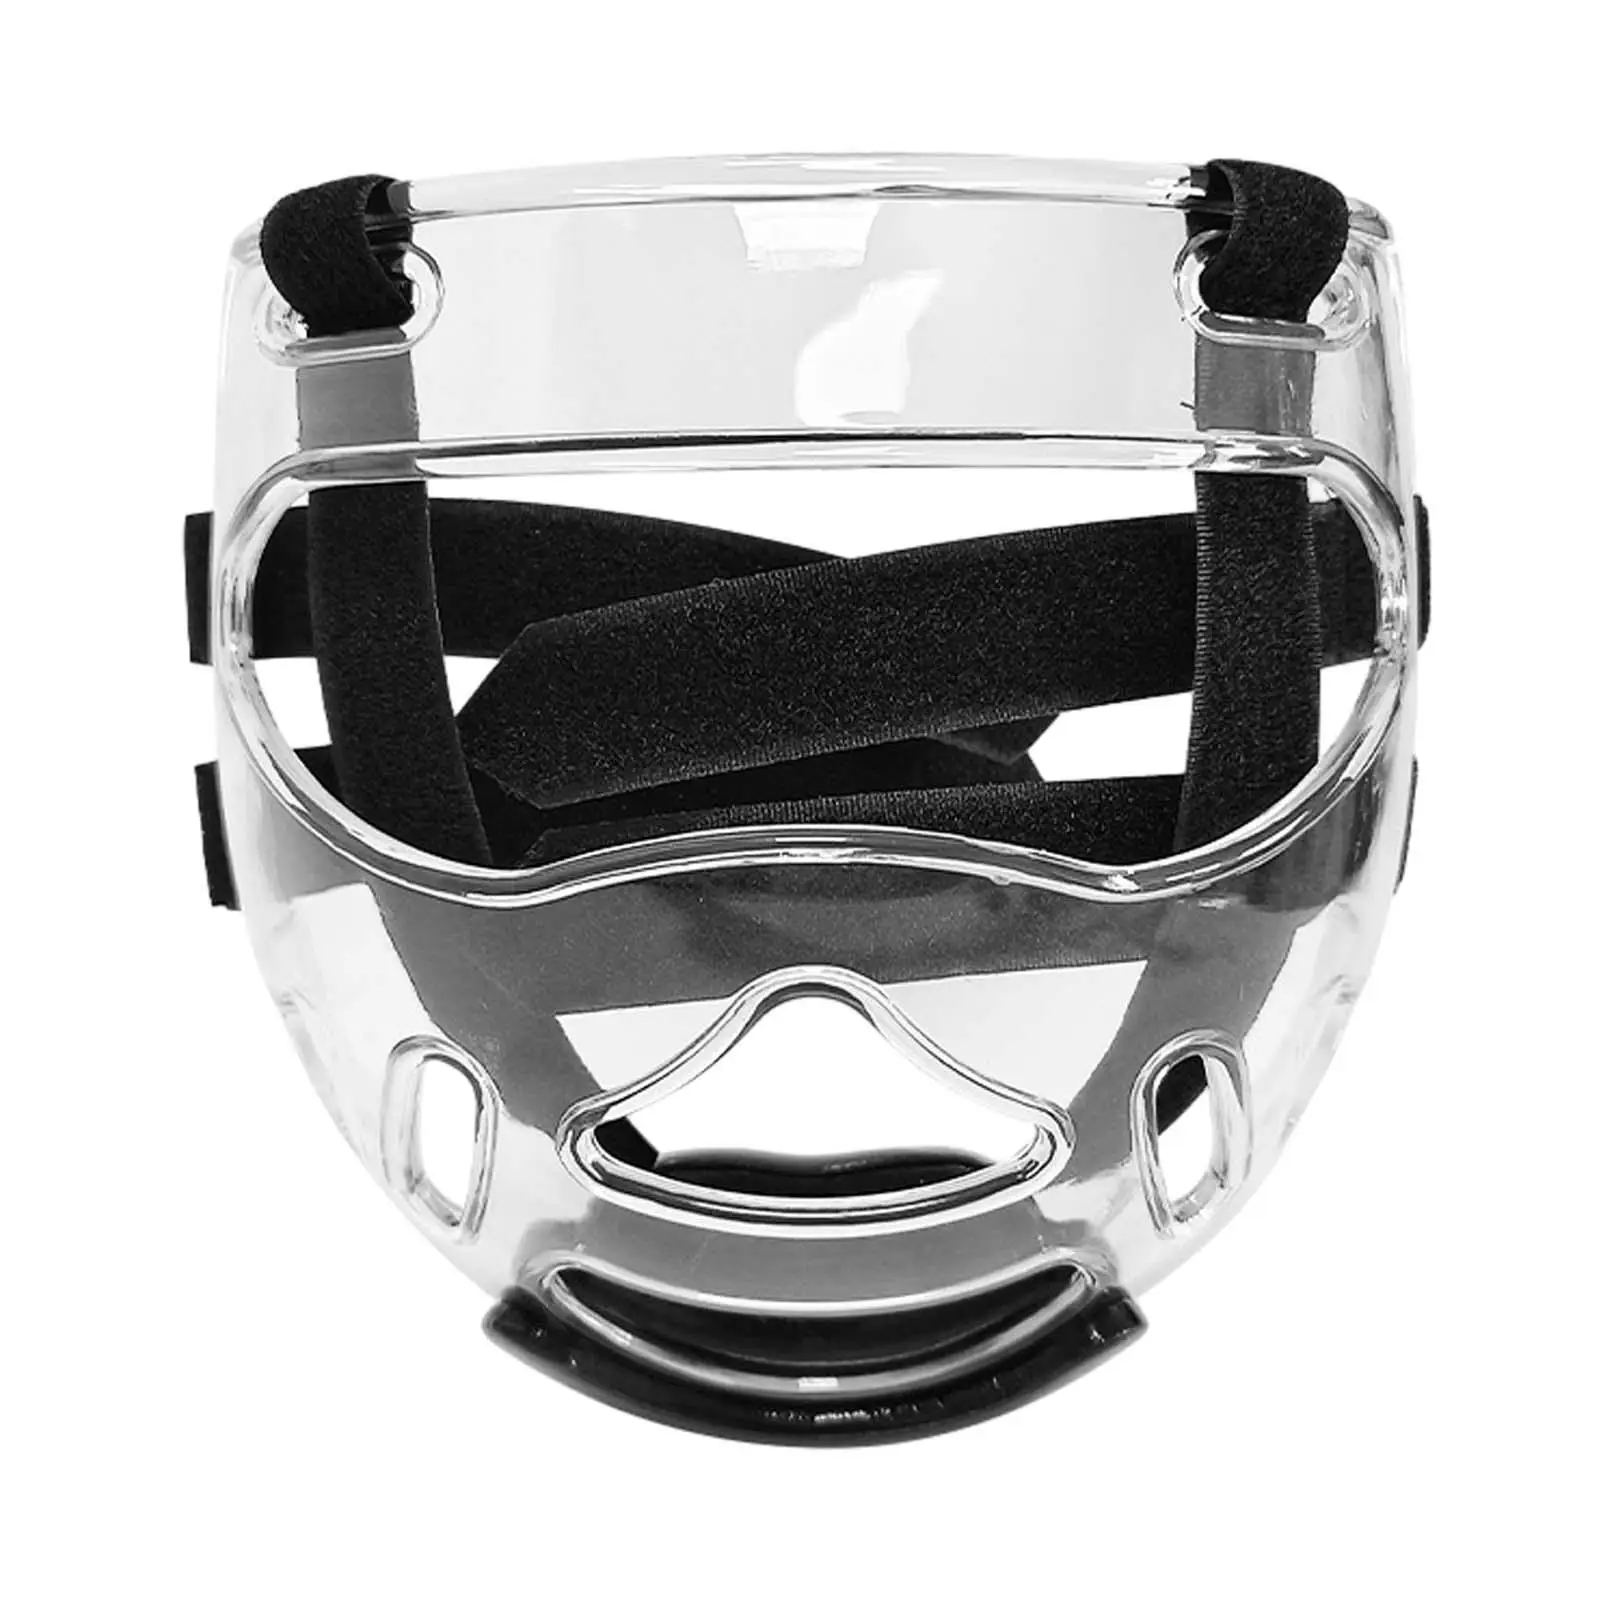 Taekwondo Mask Taekwondo Face Shield Portable Face Protection Cover for Grappling Muay Thai Wrestling Martial Arts Training